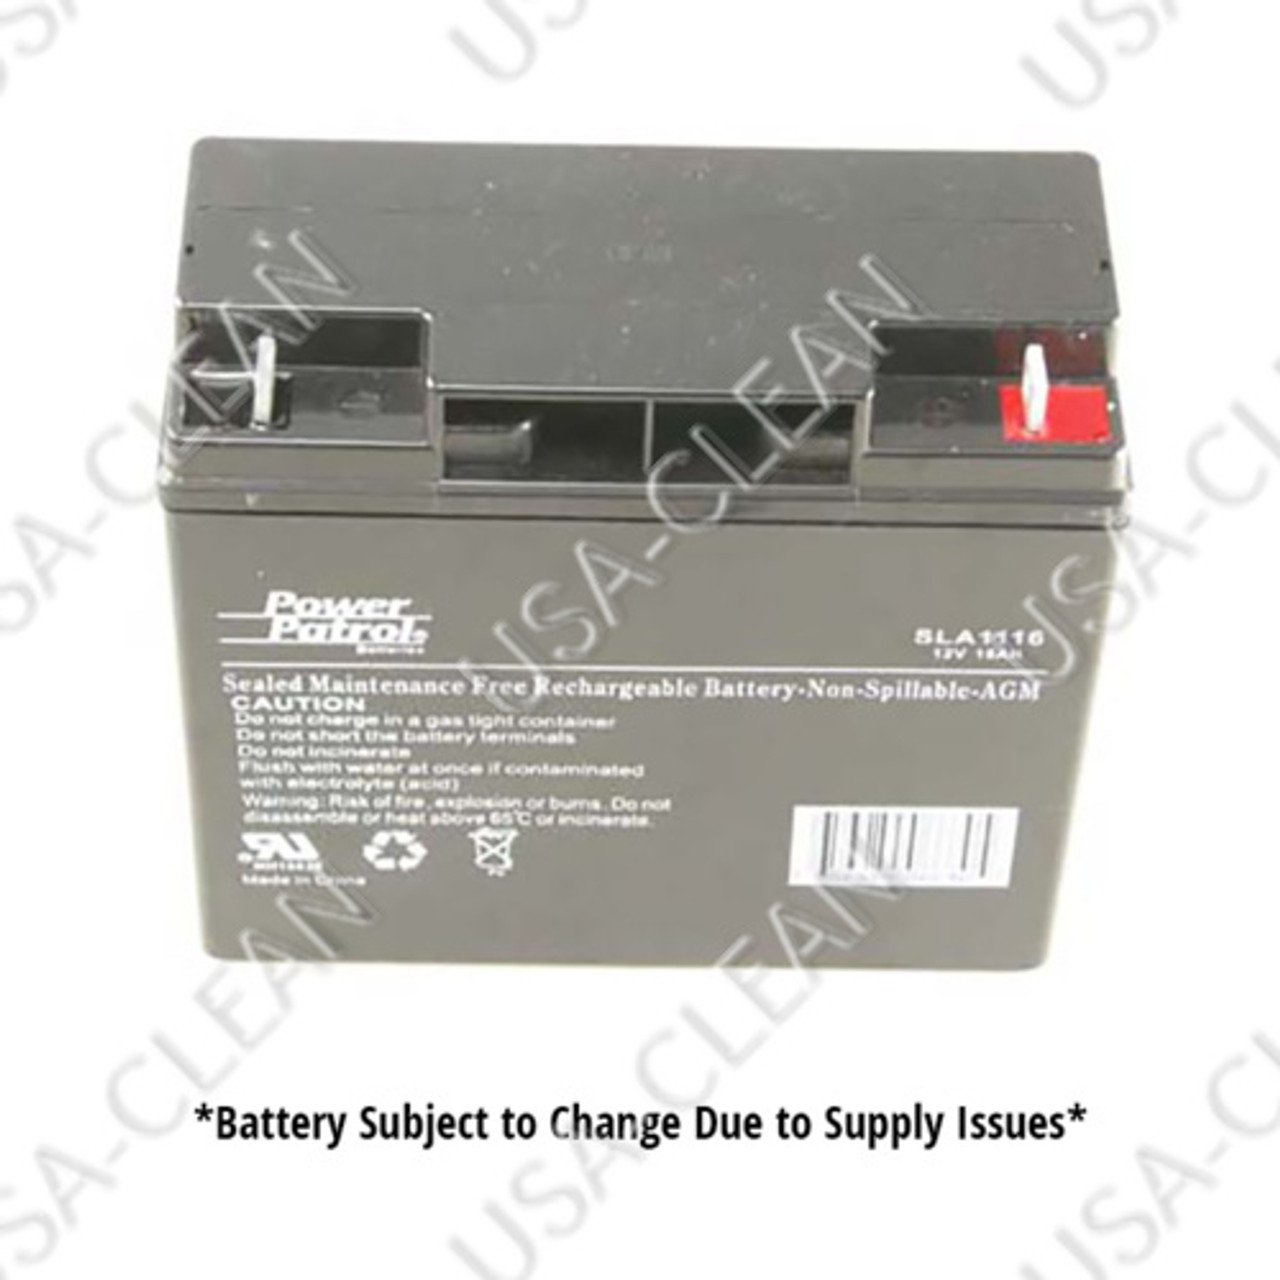 Batería Solite Agm AGM. AGM80. 80Ah 12V. Caja L4 (314x174x189mm